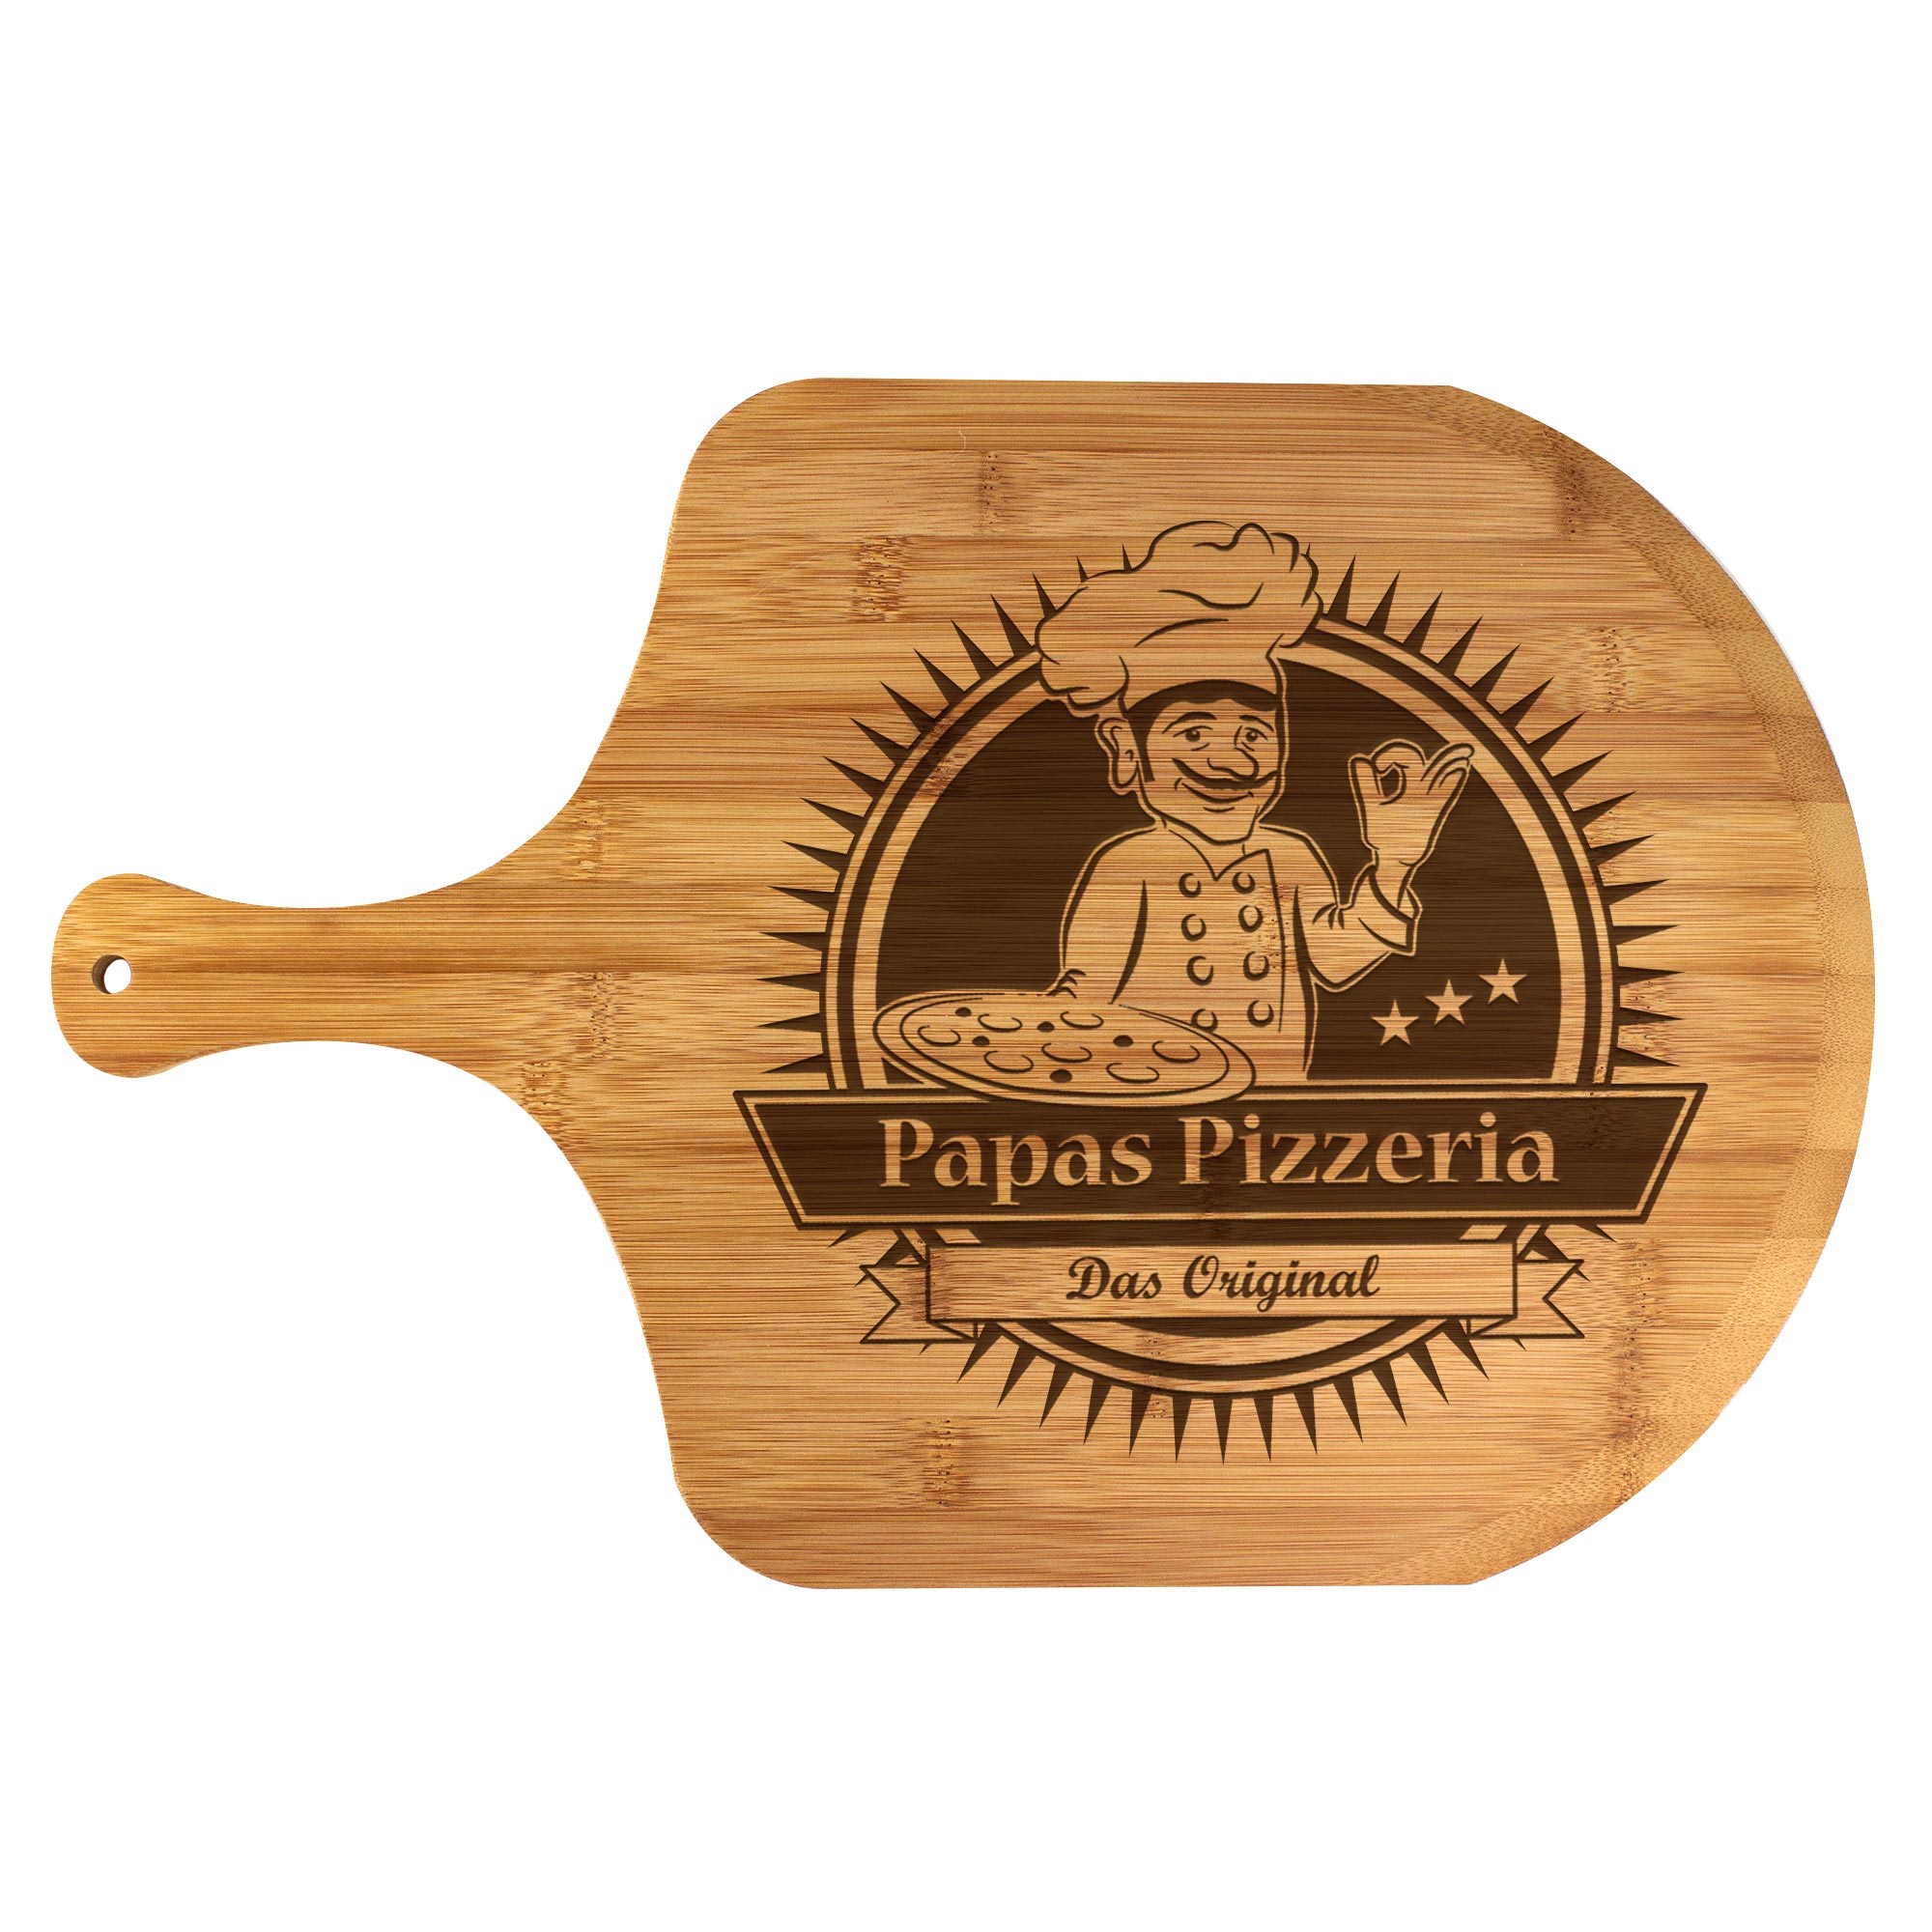 Pizzabrett Premium mit Gravur - Papas Pizzeria